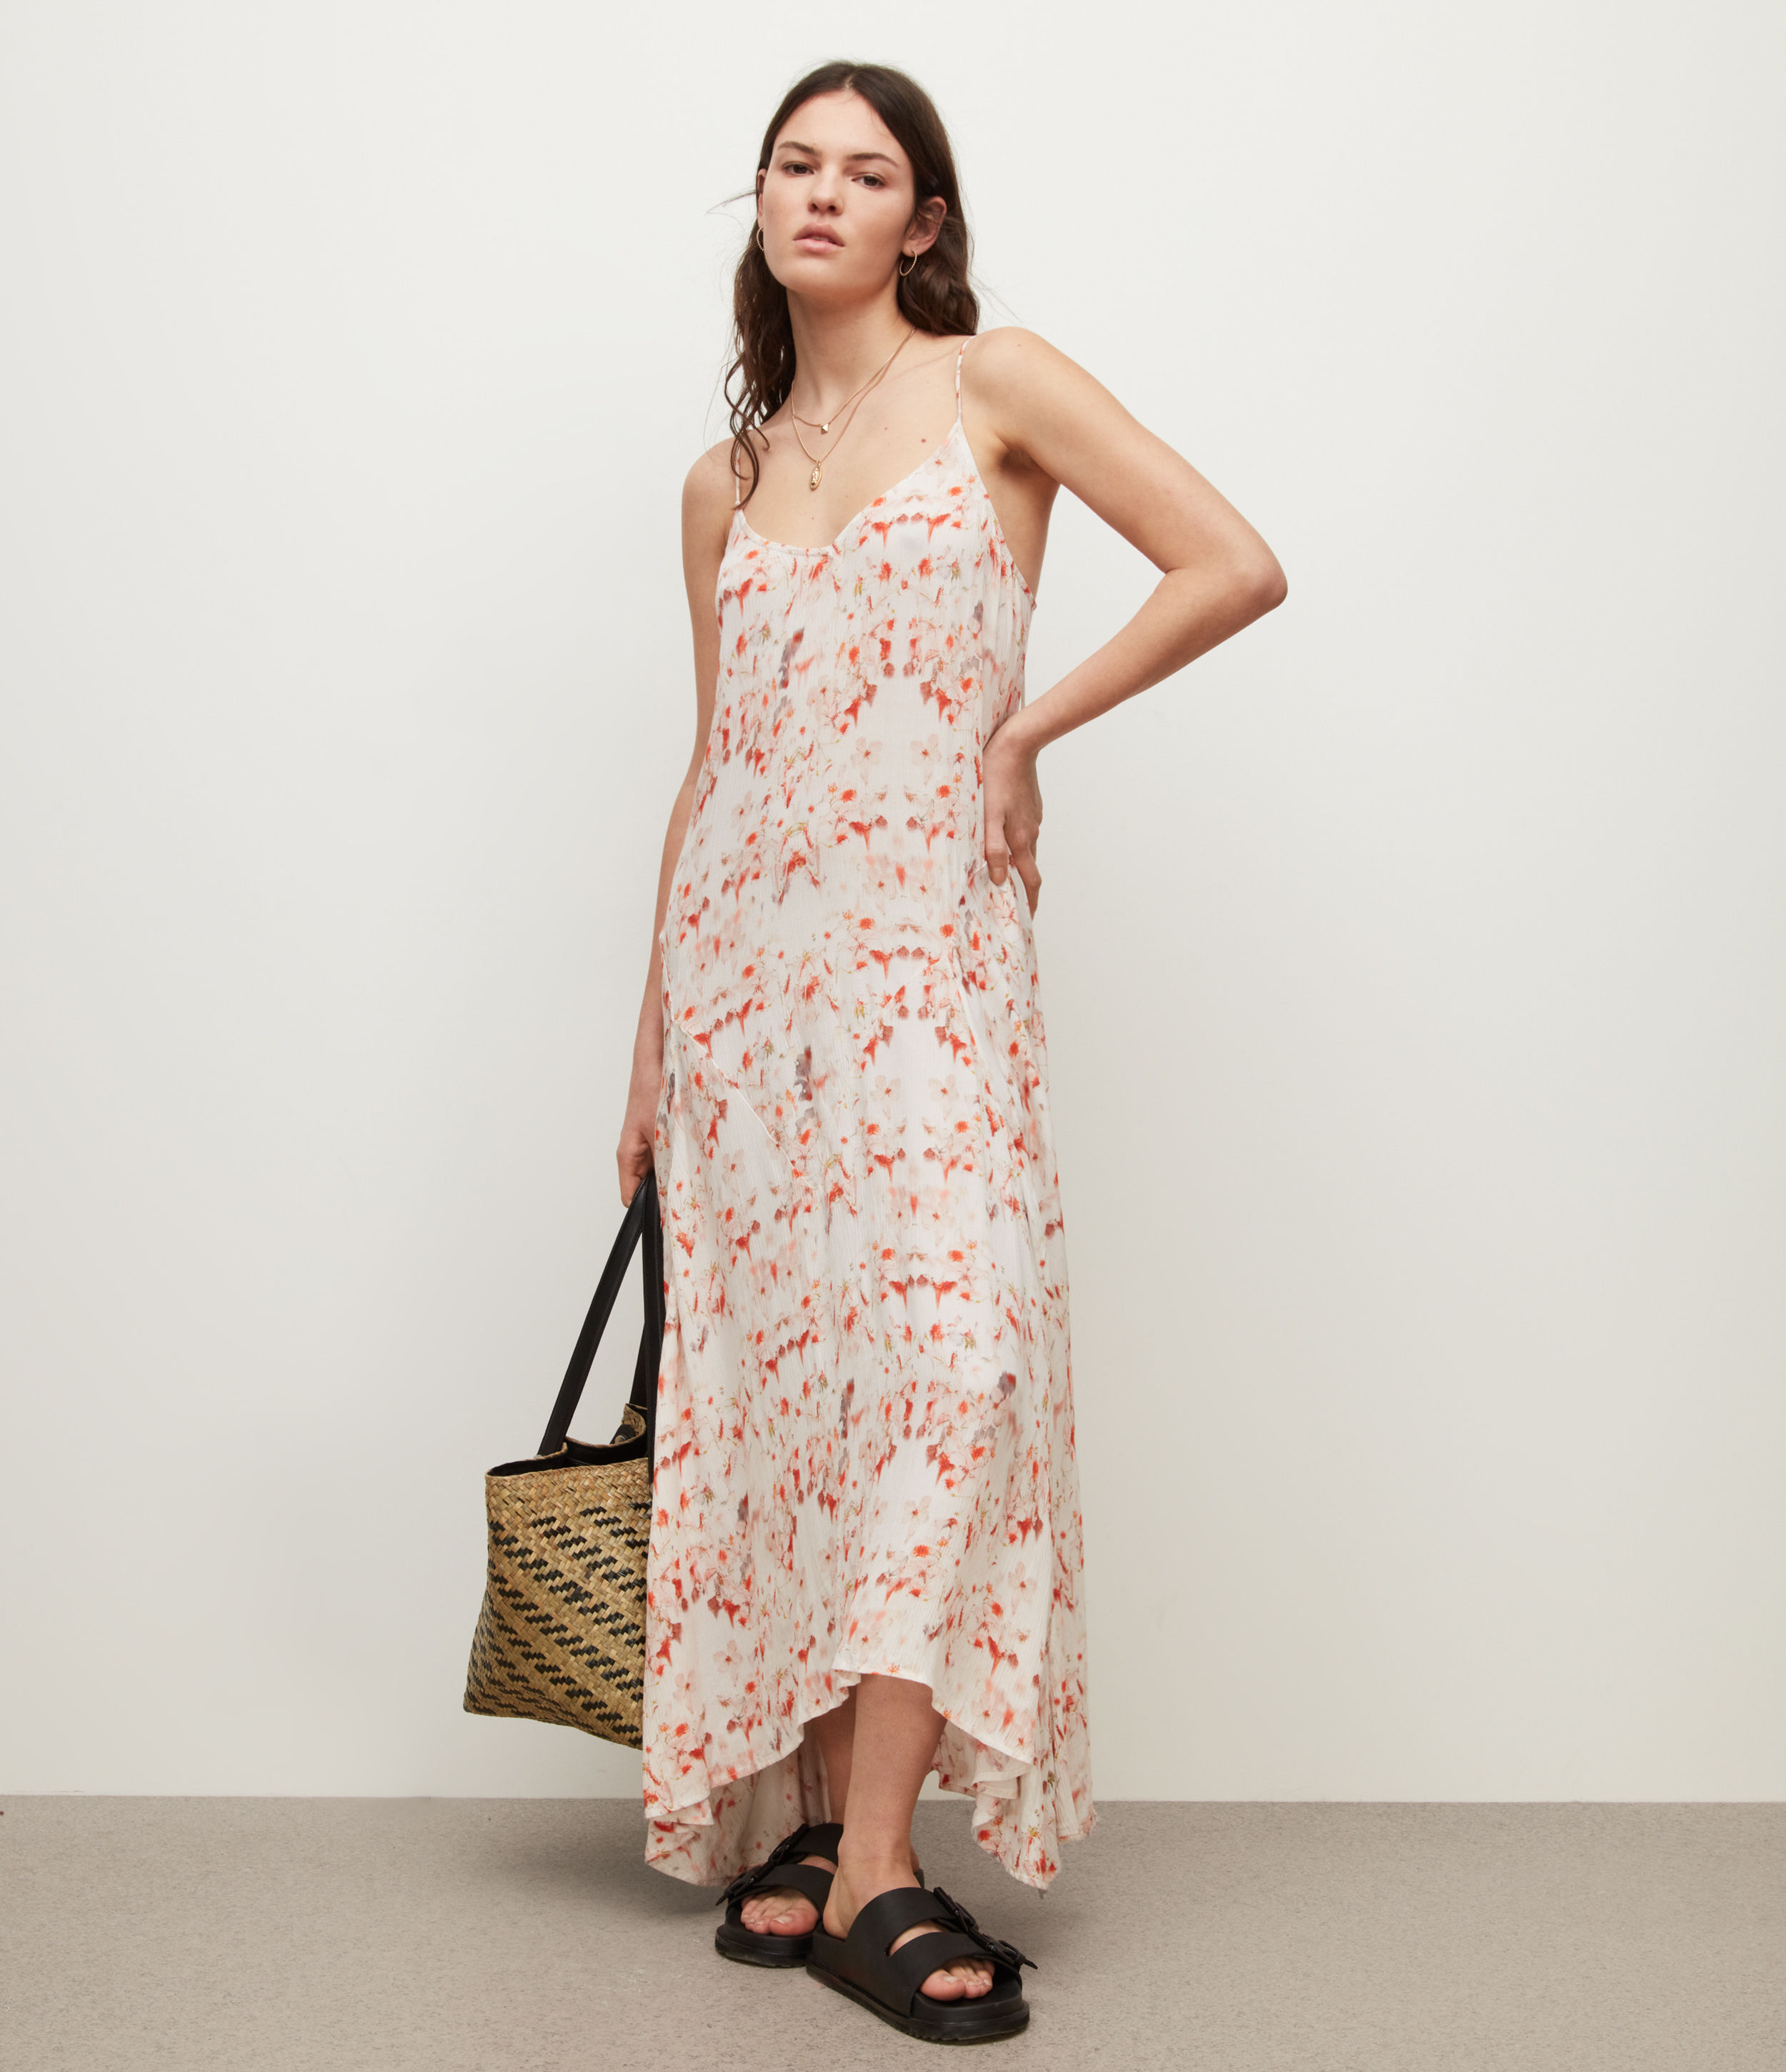 AllSaints Women's Viscose Floral Print Lightweight Essey Momo Dress, Pink and Cream, Size: 16